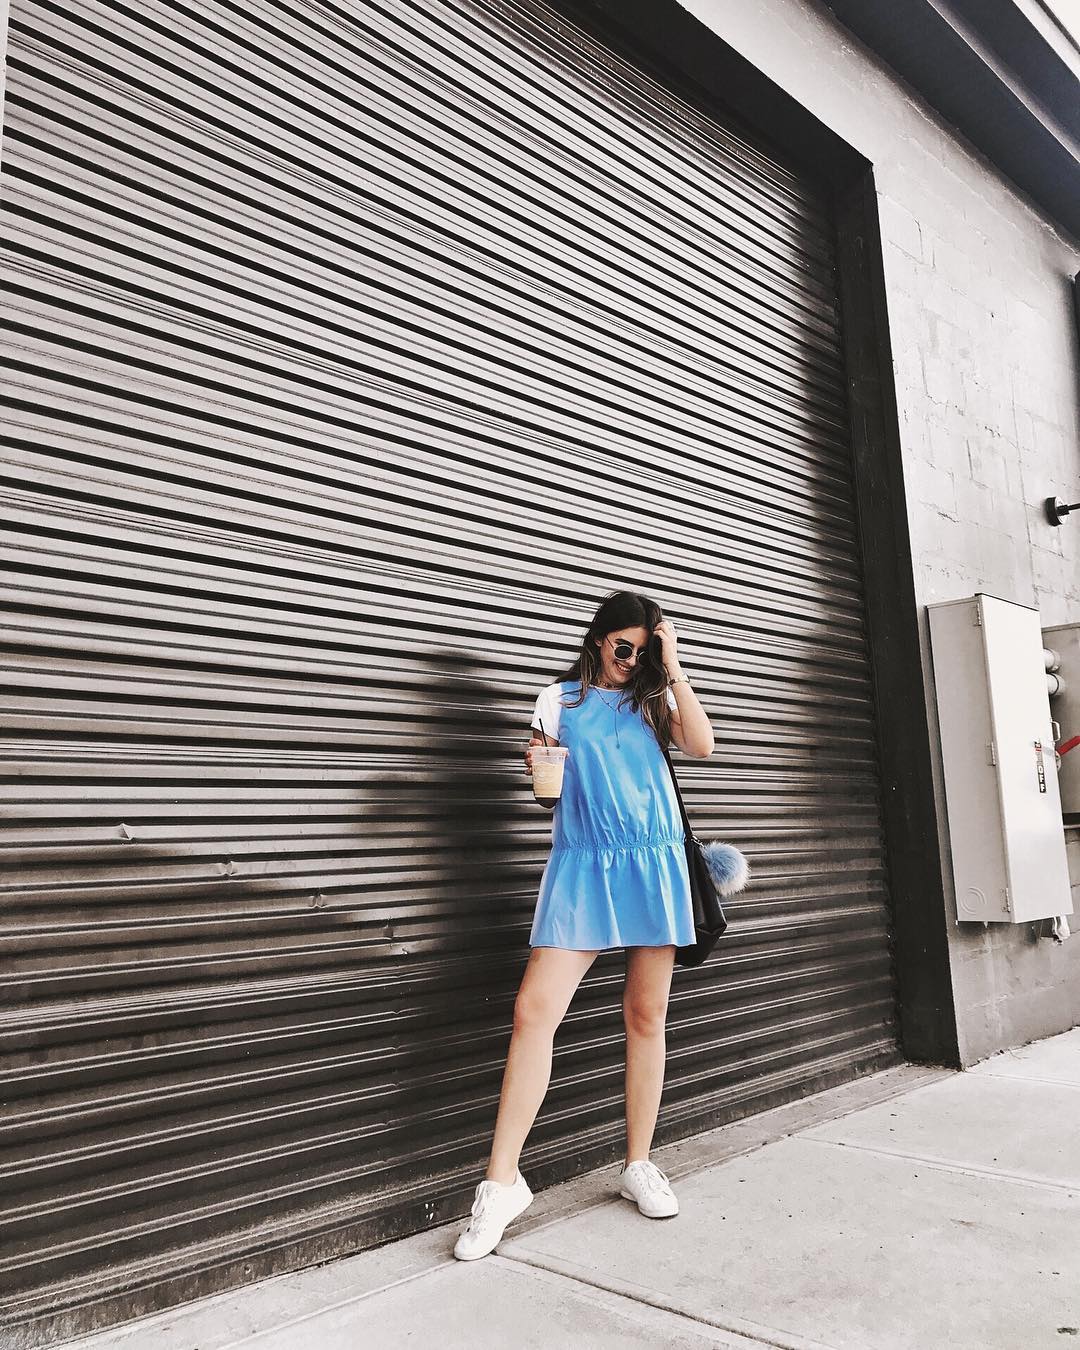 Summery blue dress